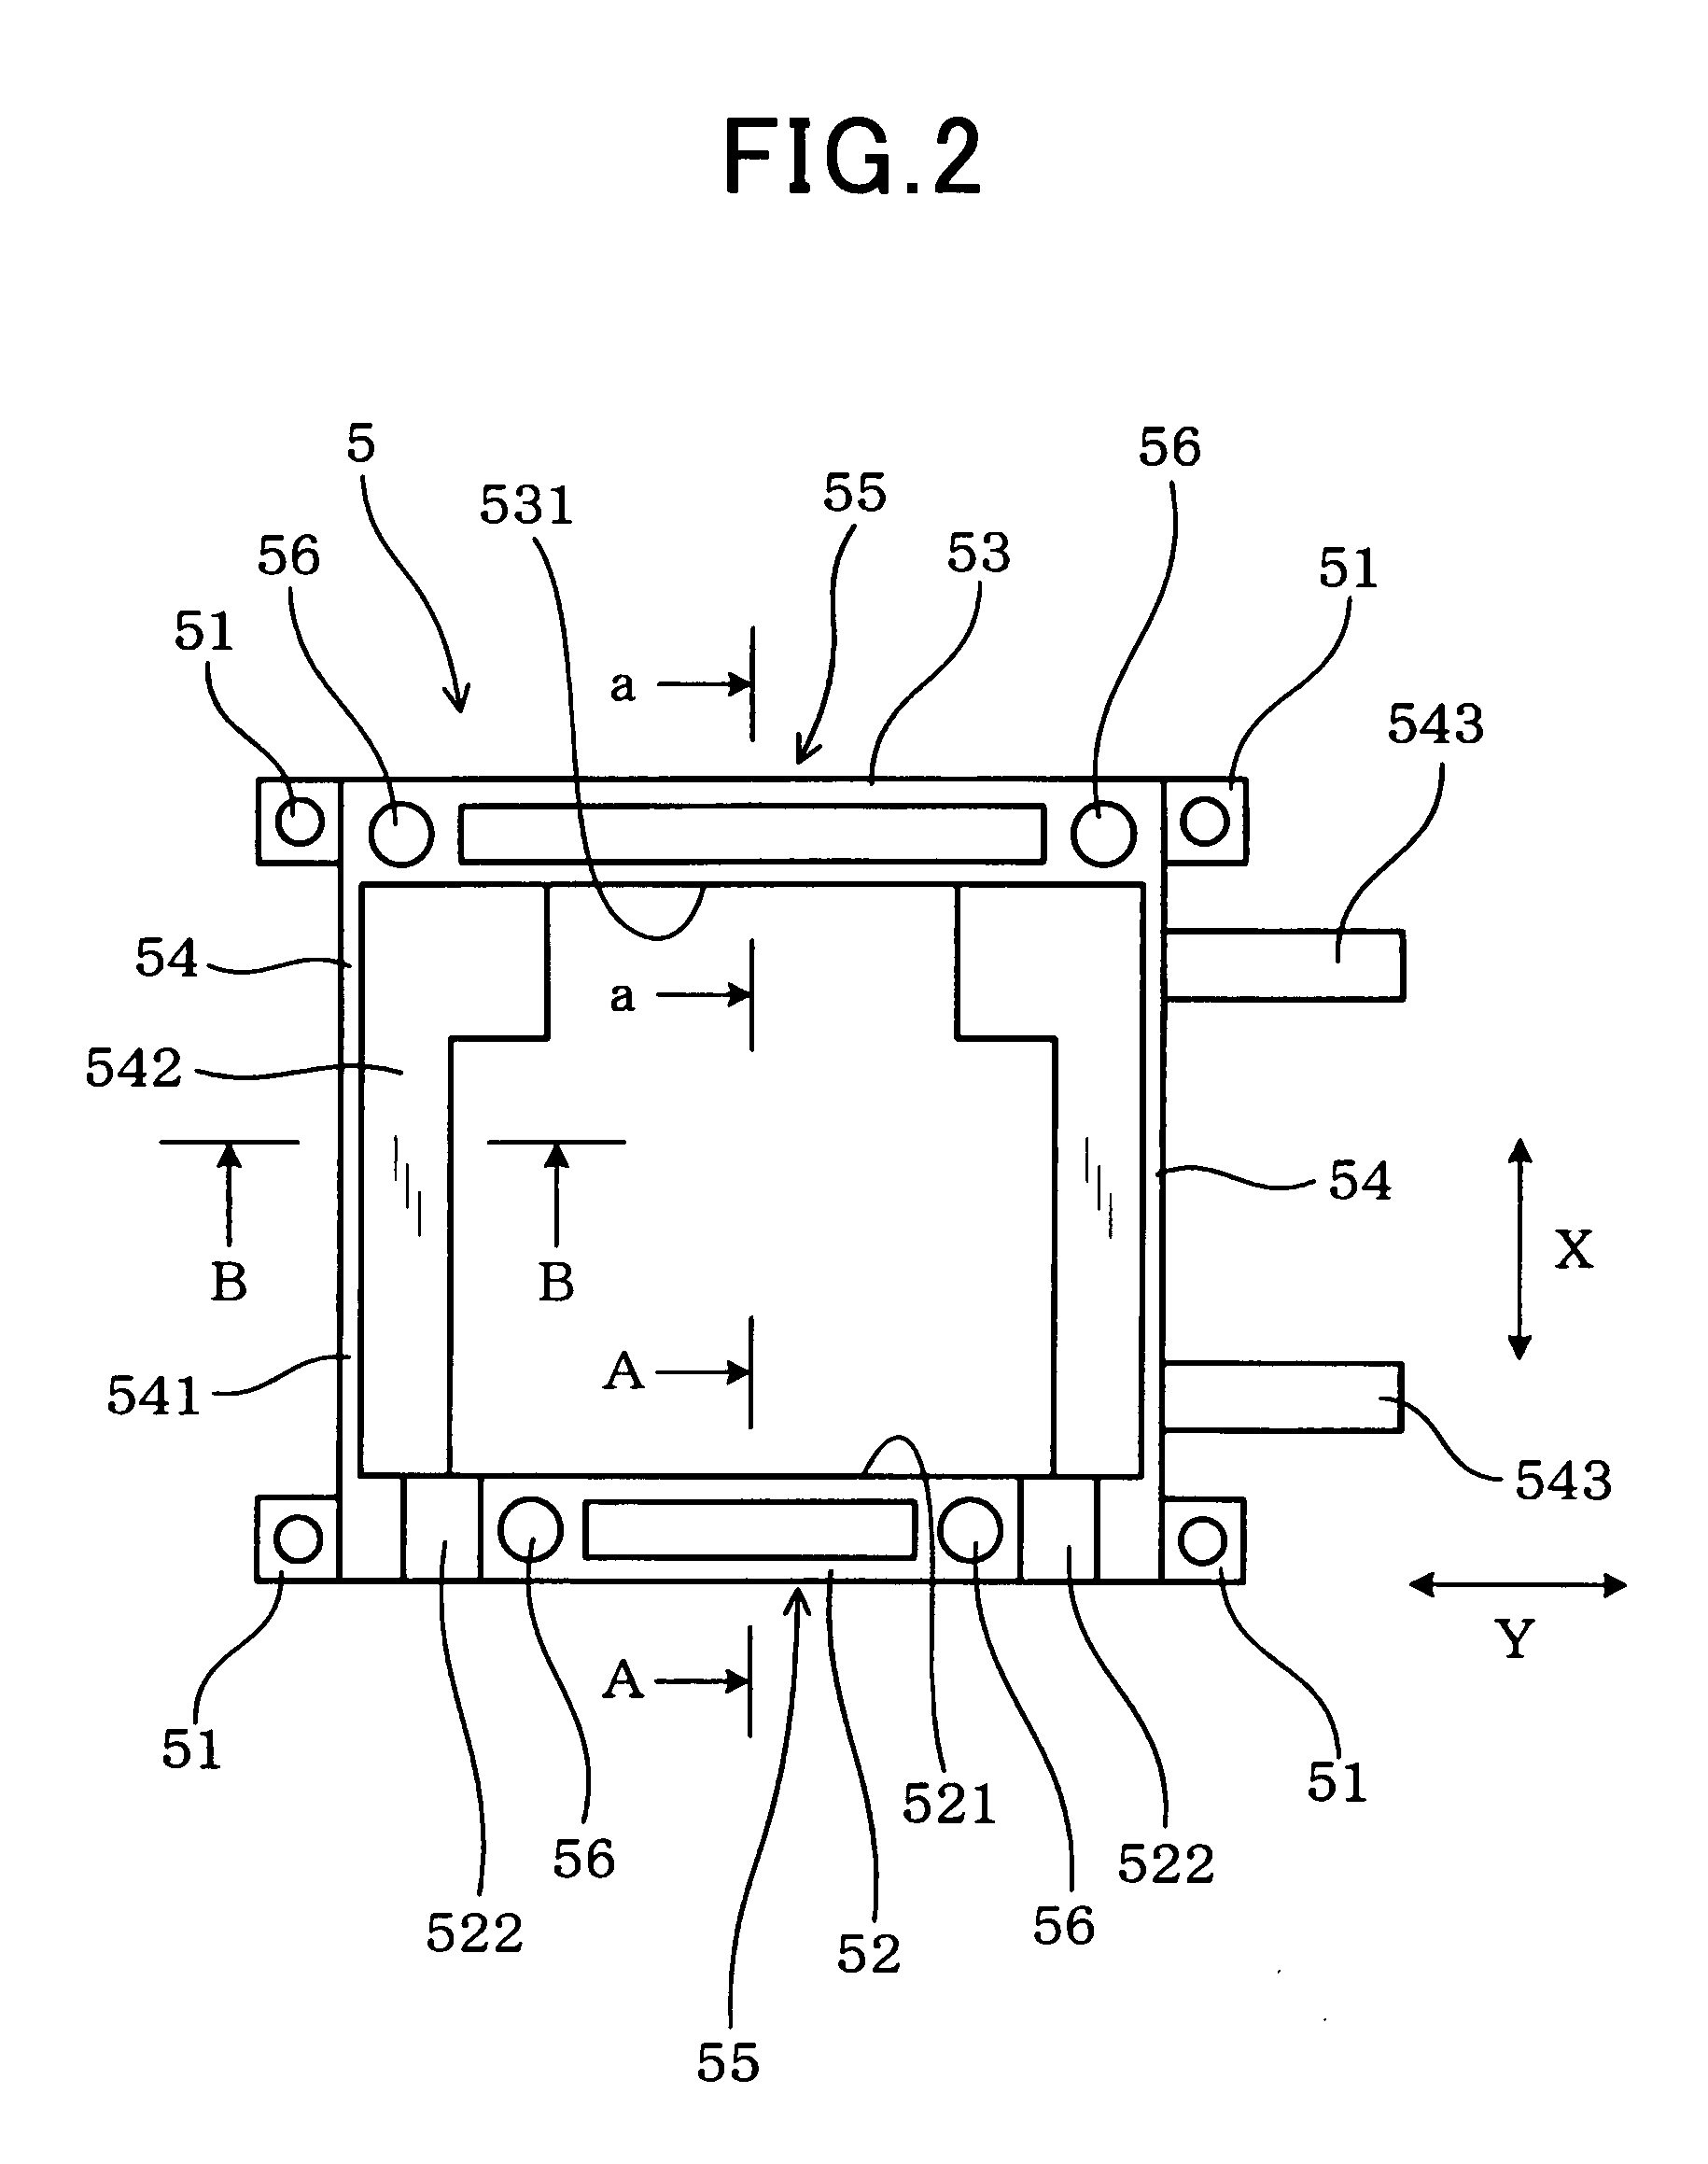 Power conversion apparatus